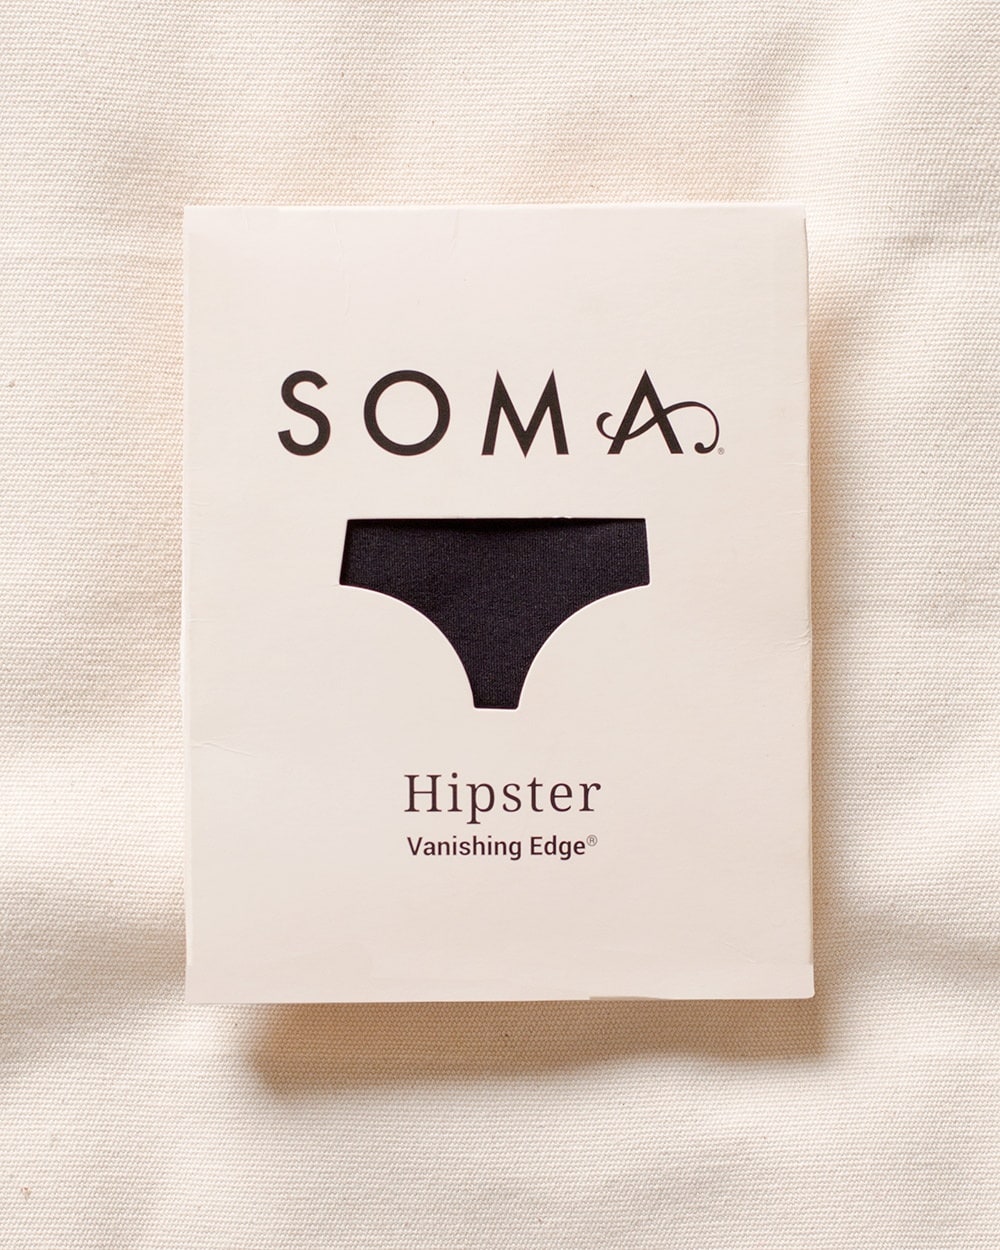 Soma Vanishing Edge Microfiber Hipster with Lace, Nightfall Navy, Size M